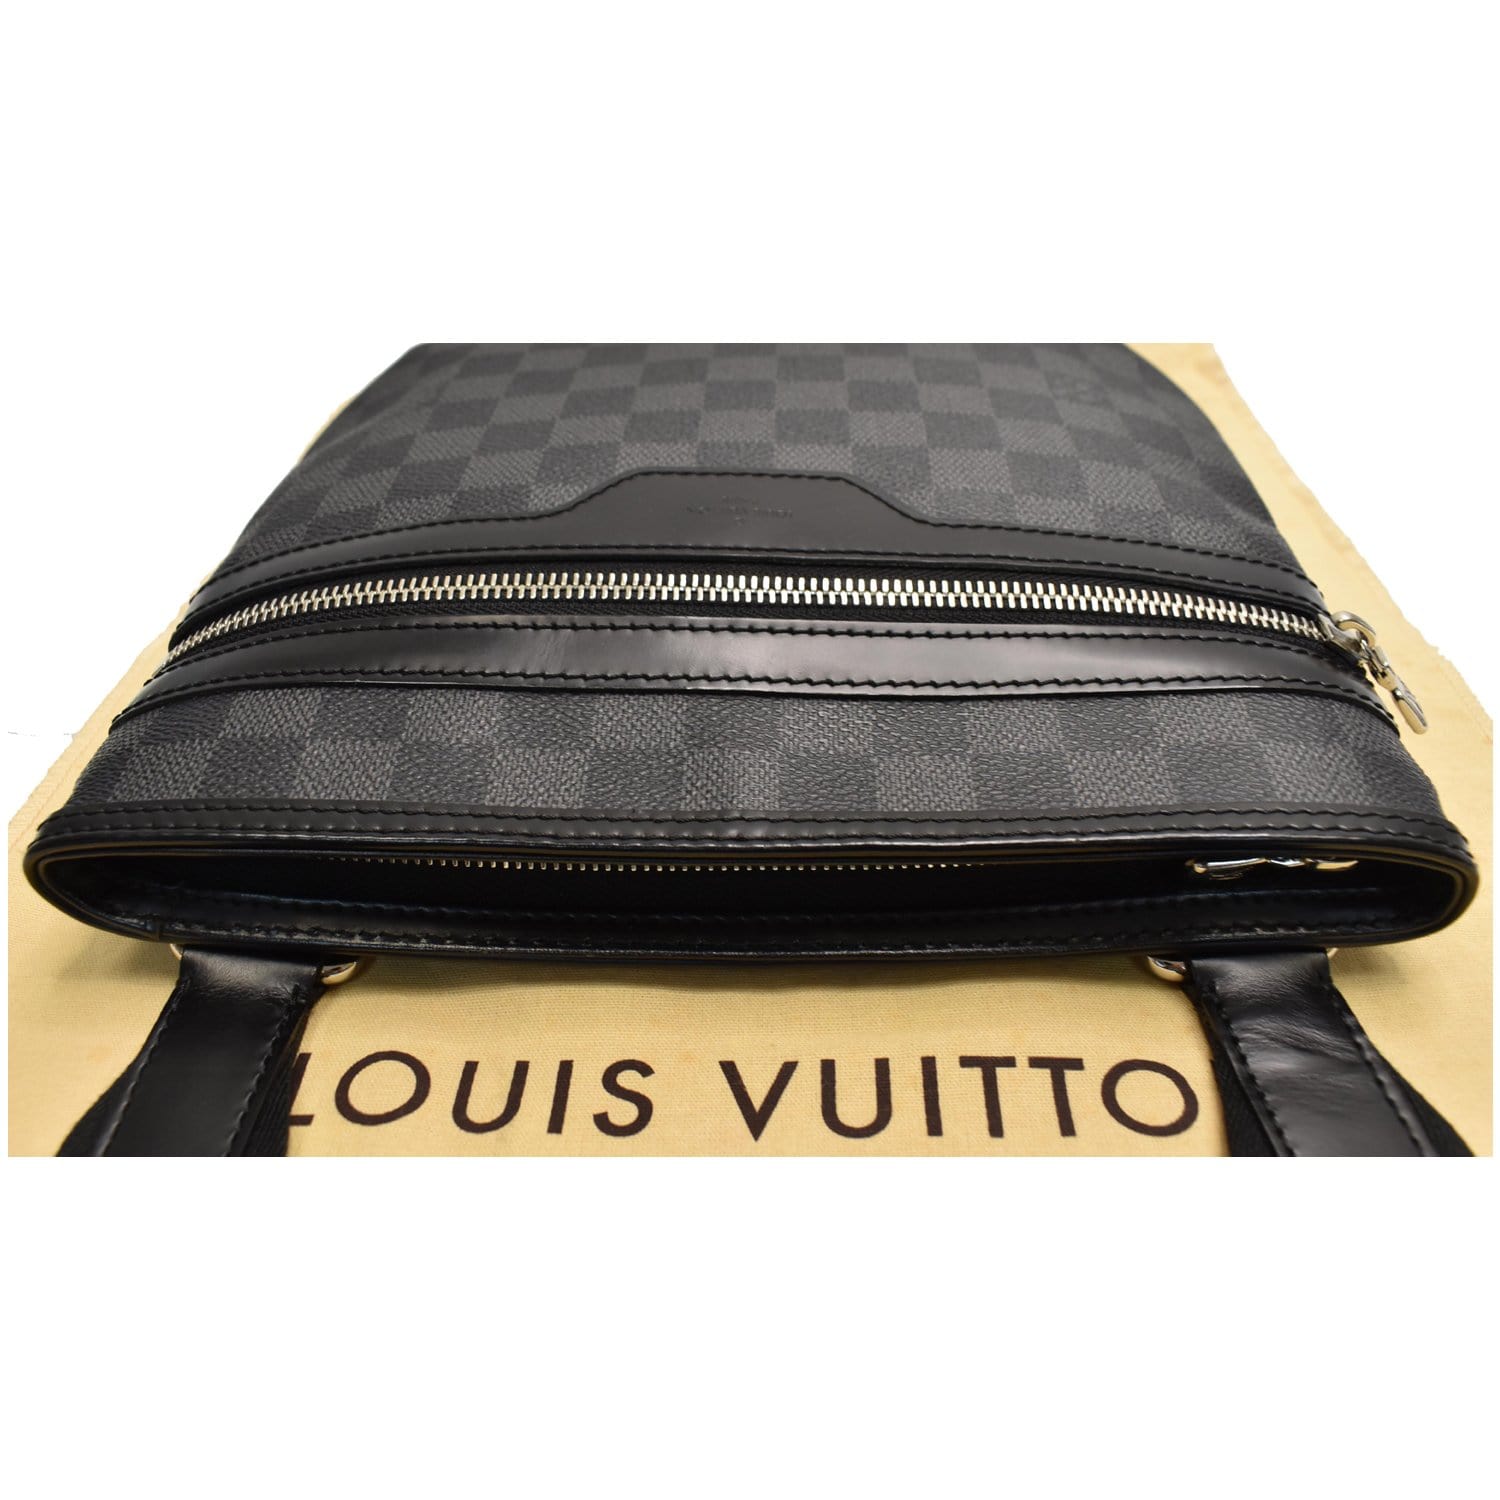 Sold at Auction: LOUIS VUITTON THOMAS DAMIER GRAPHITE CROSSBODY BAG